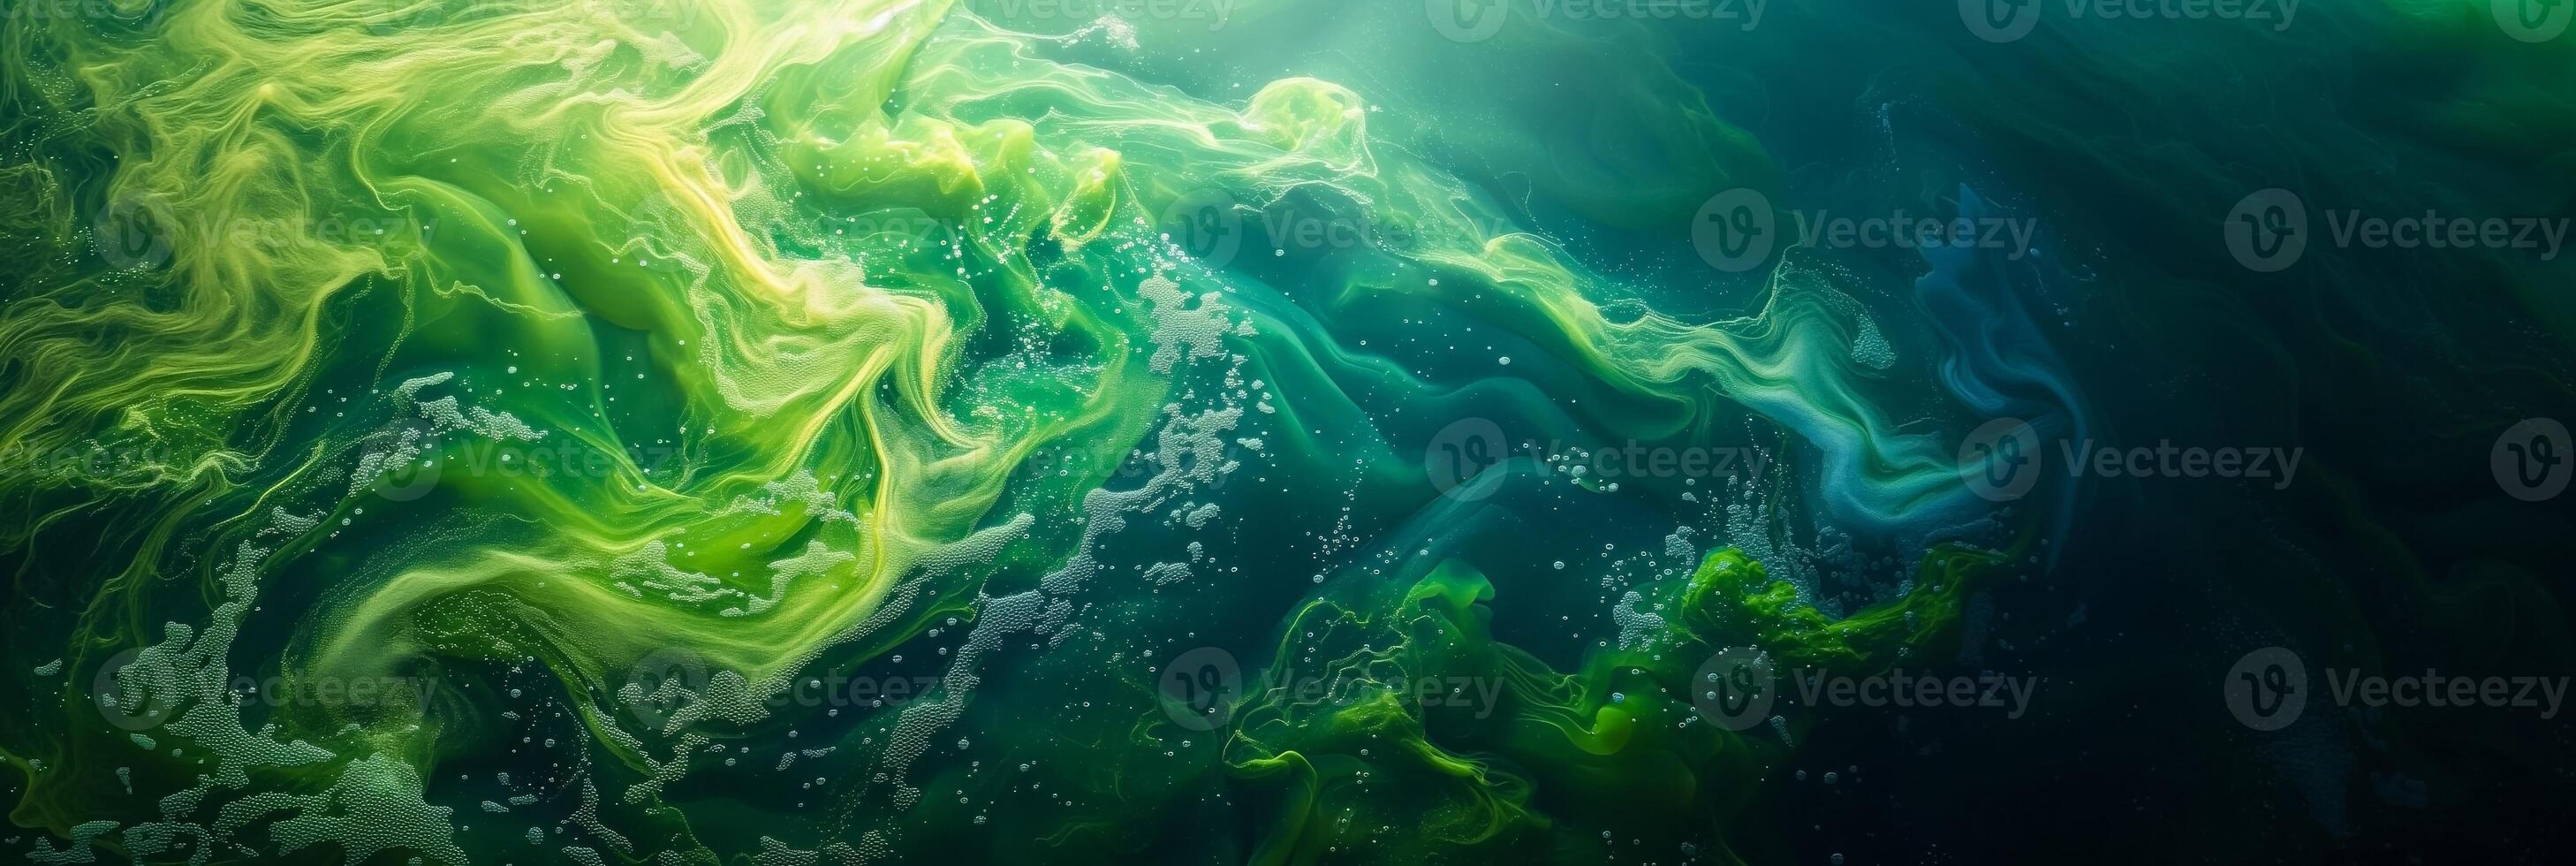 ai gegenereerd groen marine kolken abstract kunst achtergrond foto